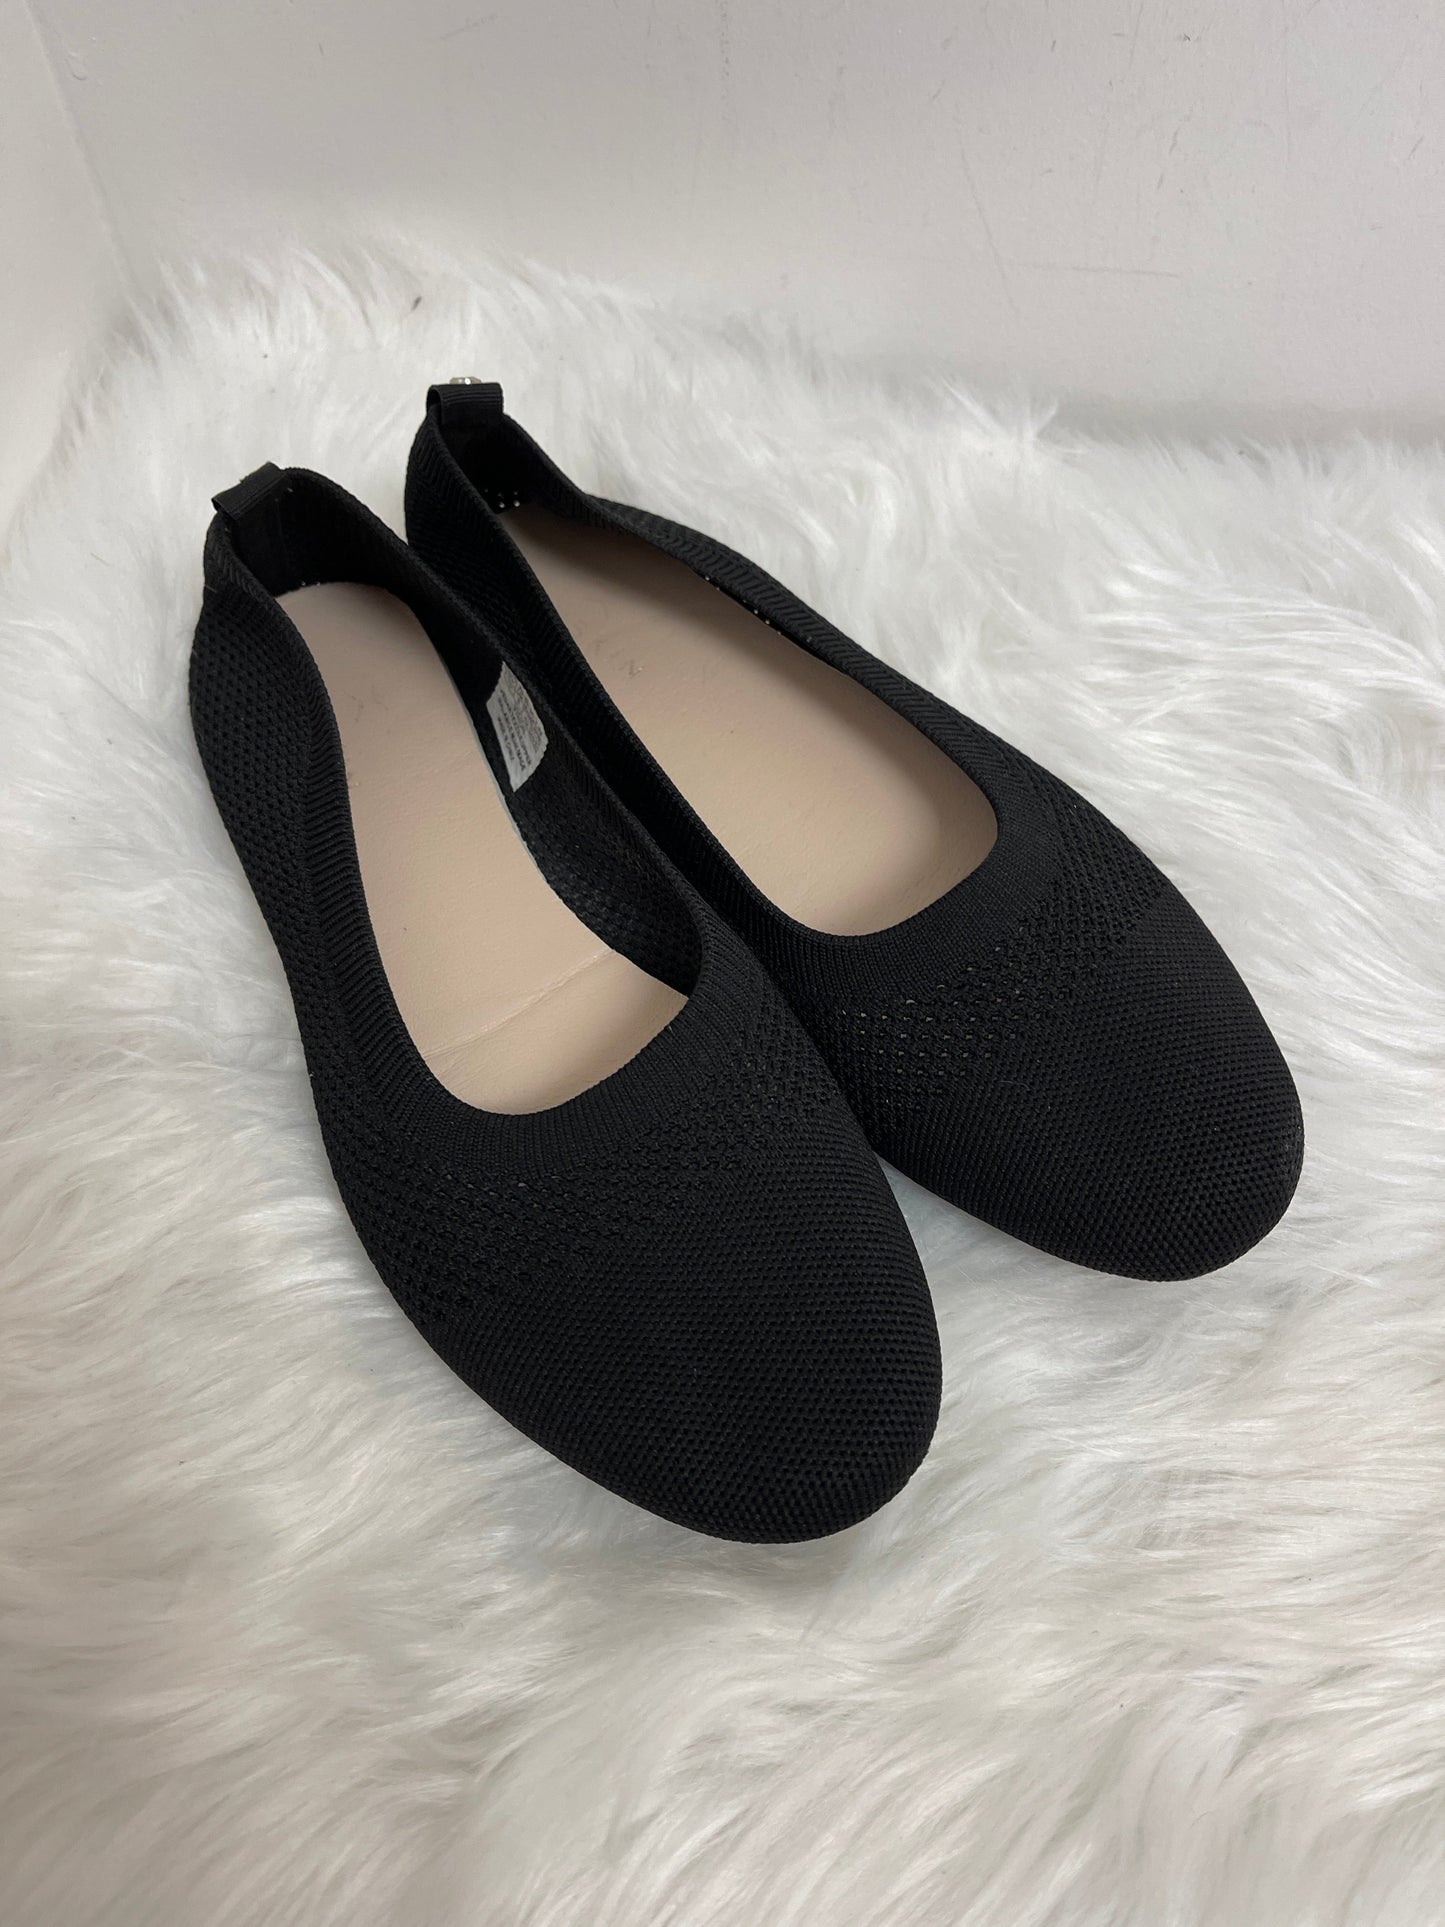 Black Shoes Flats Danskin, Size 10